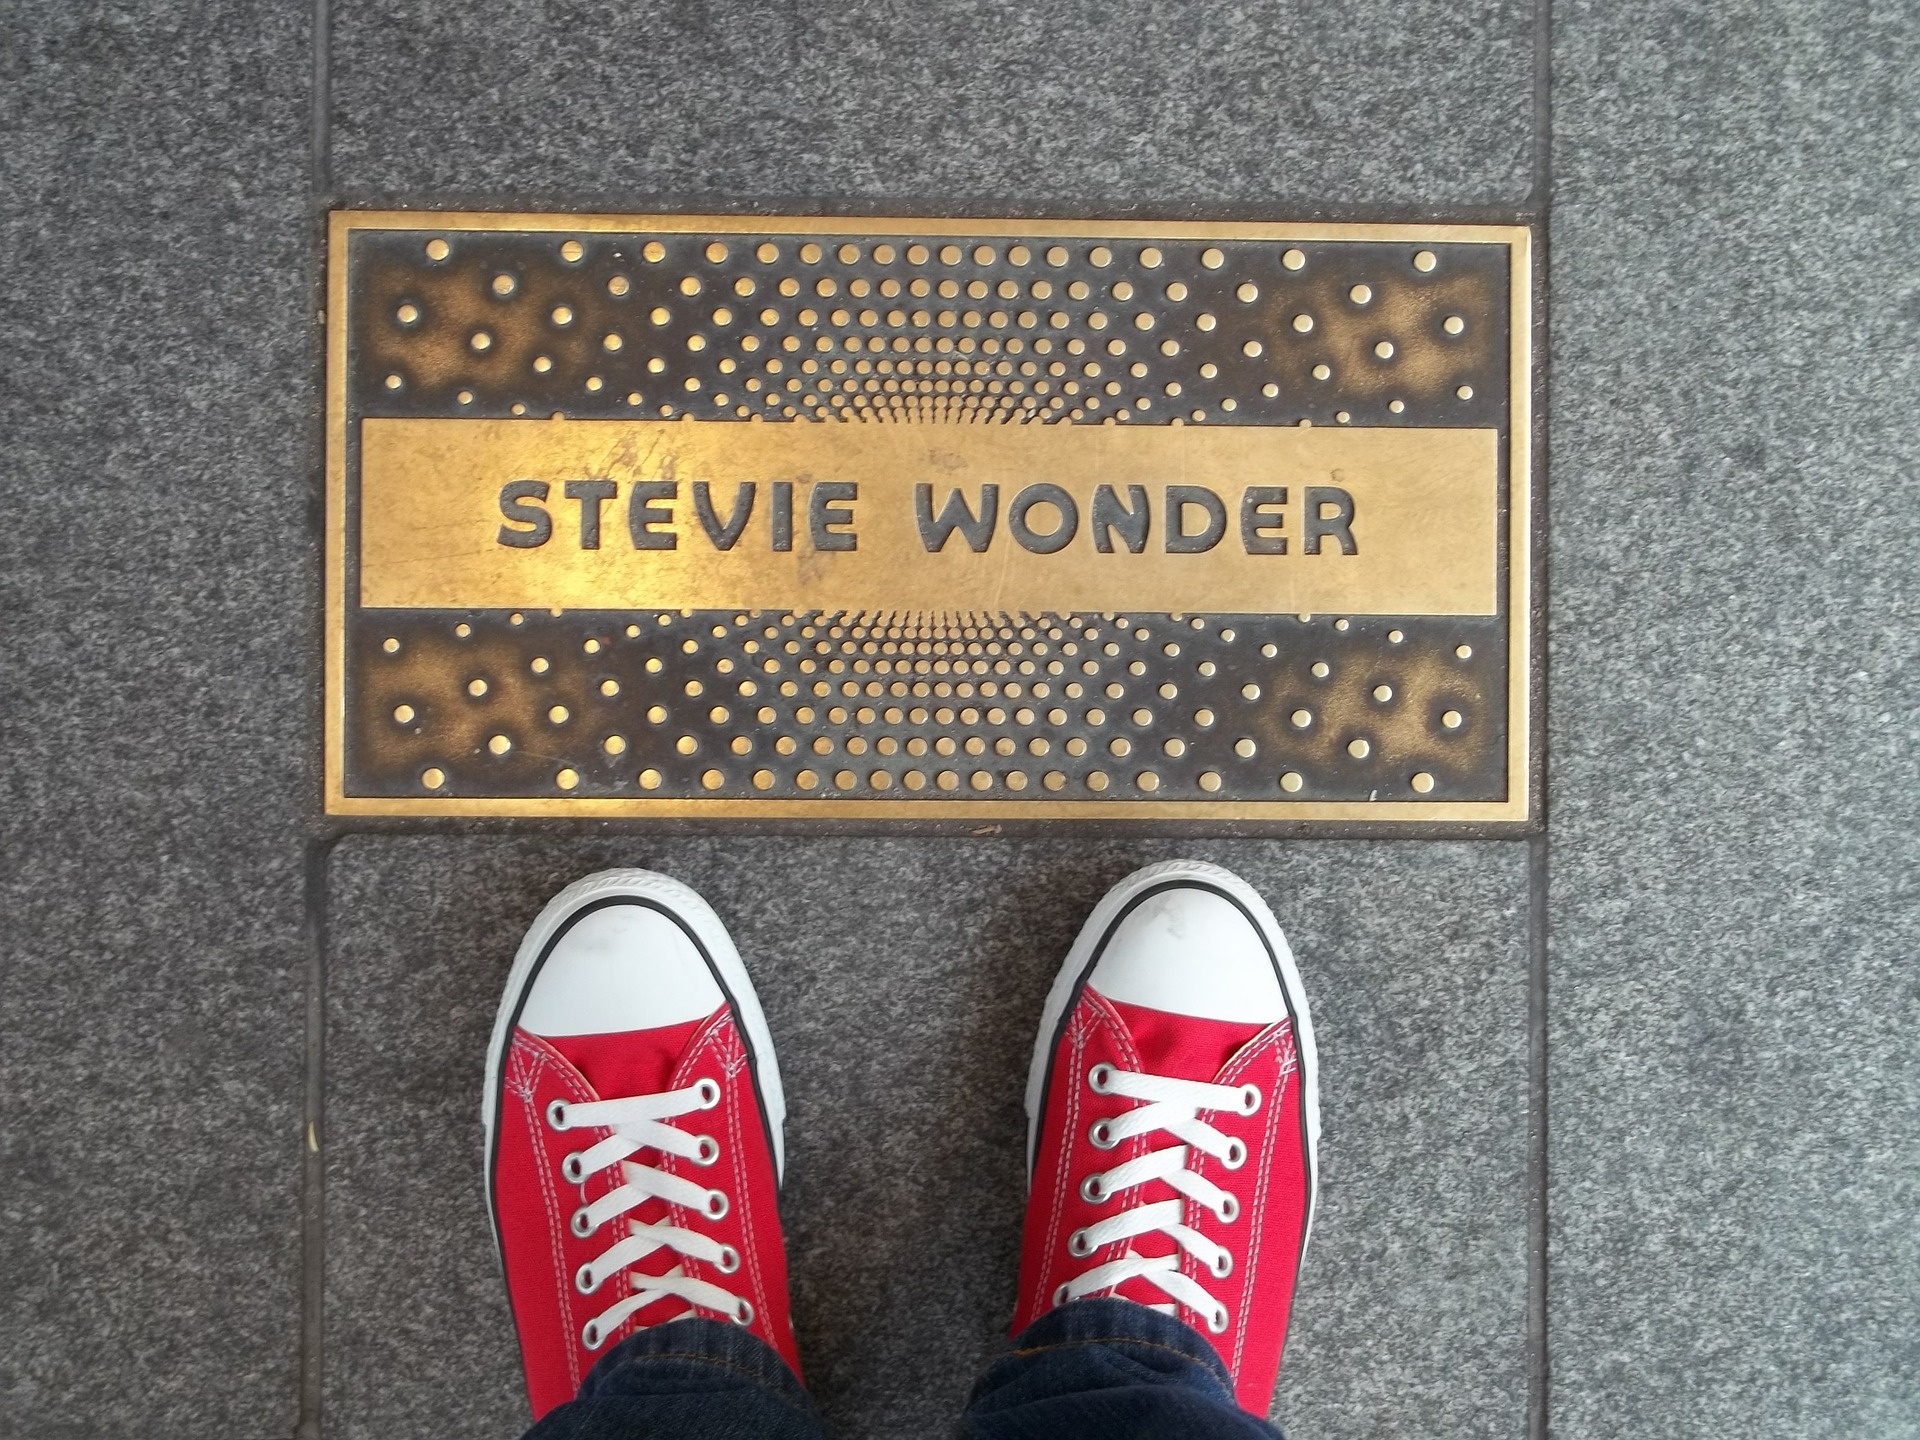 Stevie Wonder plaque